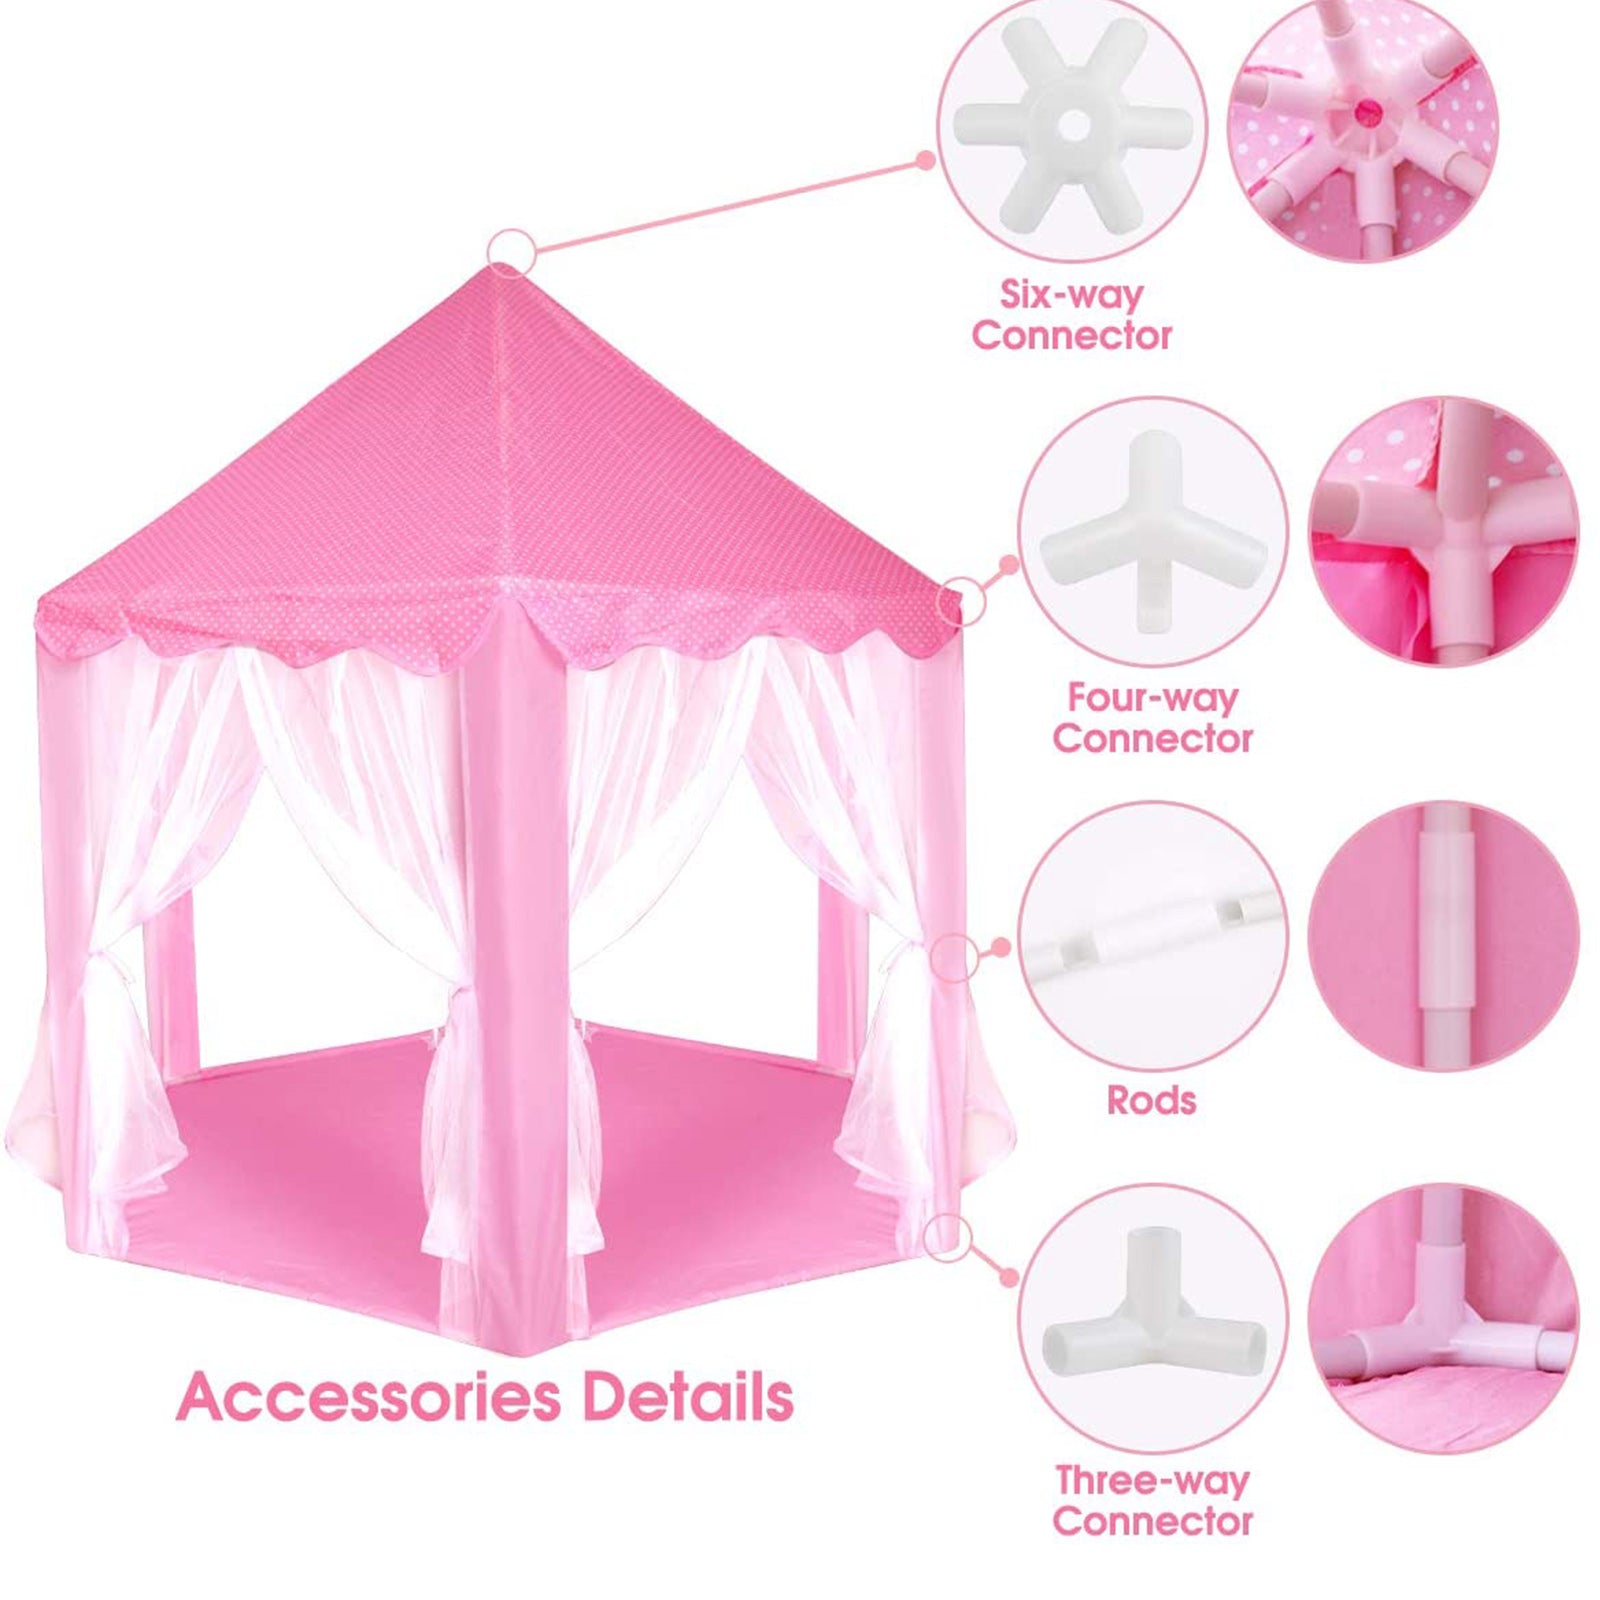 Portable Folding Princess Castle Pink Castle Pop-Up Kids' Play Tent w/ Star Lights